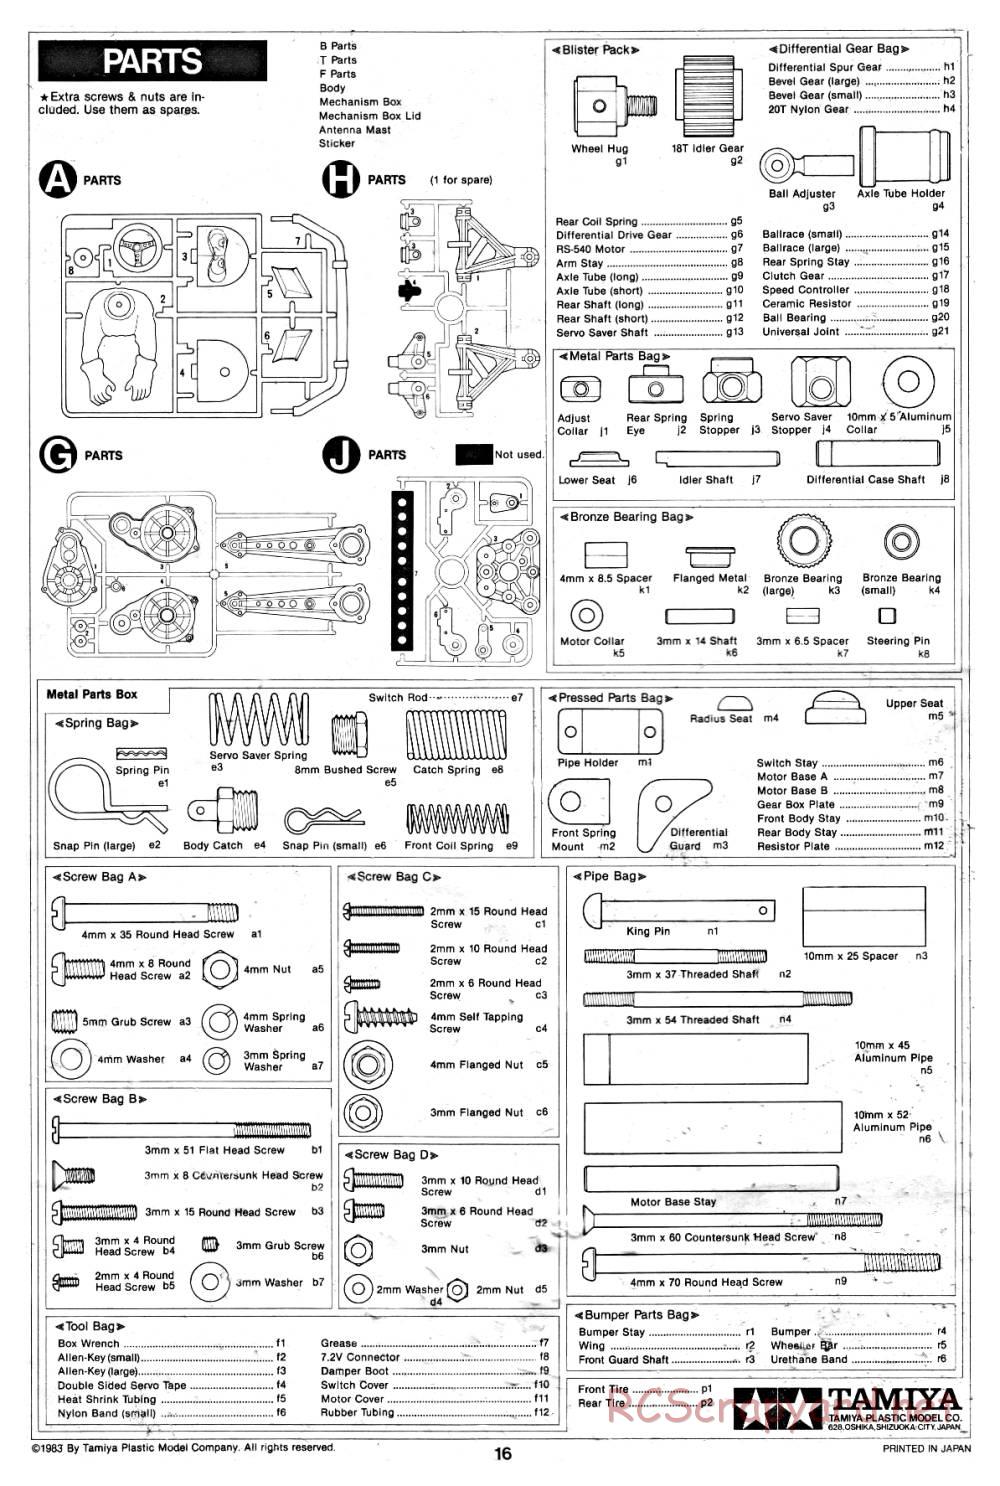 Tamiya - Willy's Wheeler - 58039 - Manual - Page 16